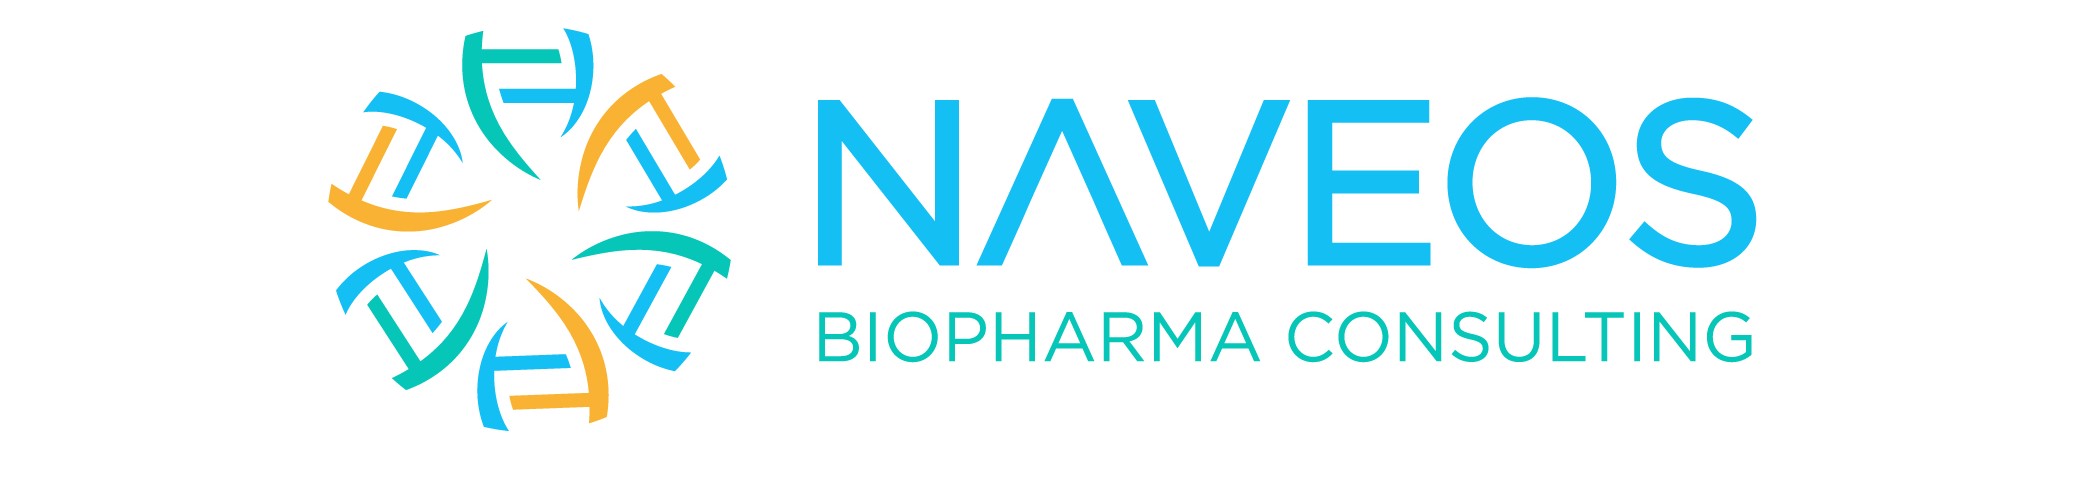 Naveos Biopharma Consulting